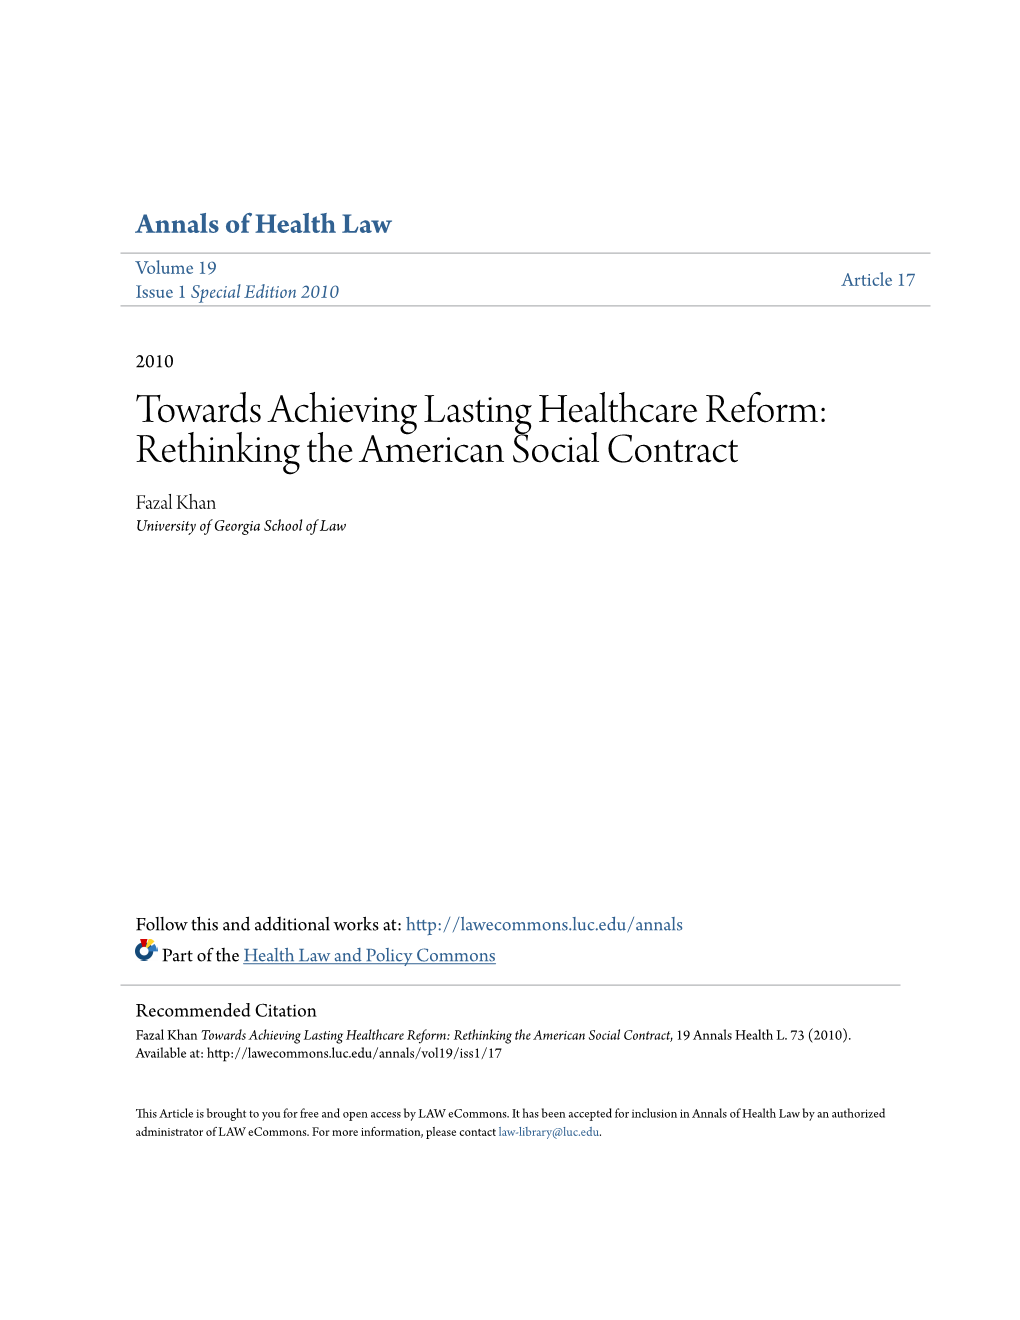 Towards Achieving Lasting Healthcare Reform: Rethinking the American Social Contract Fazal Khan University of Georgia School of Law